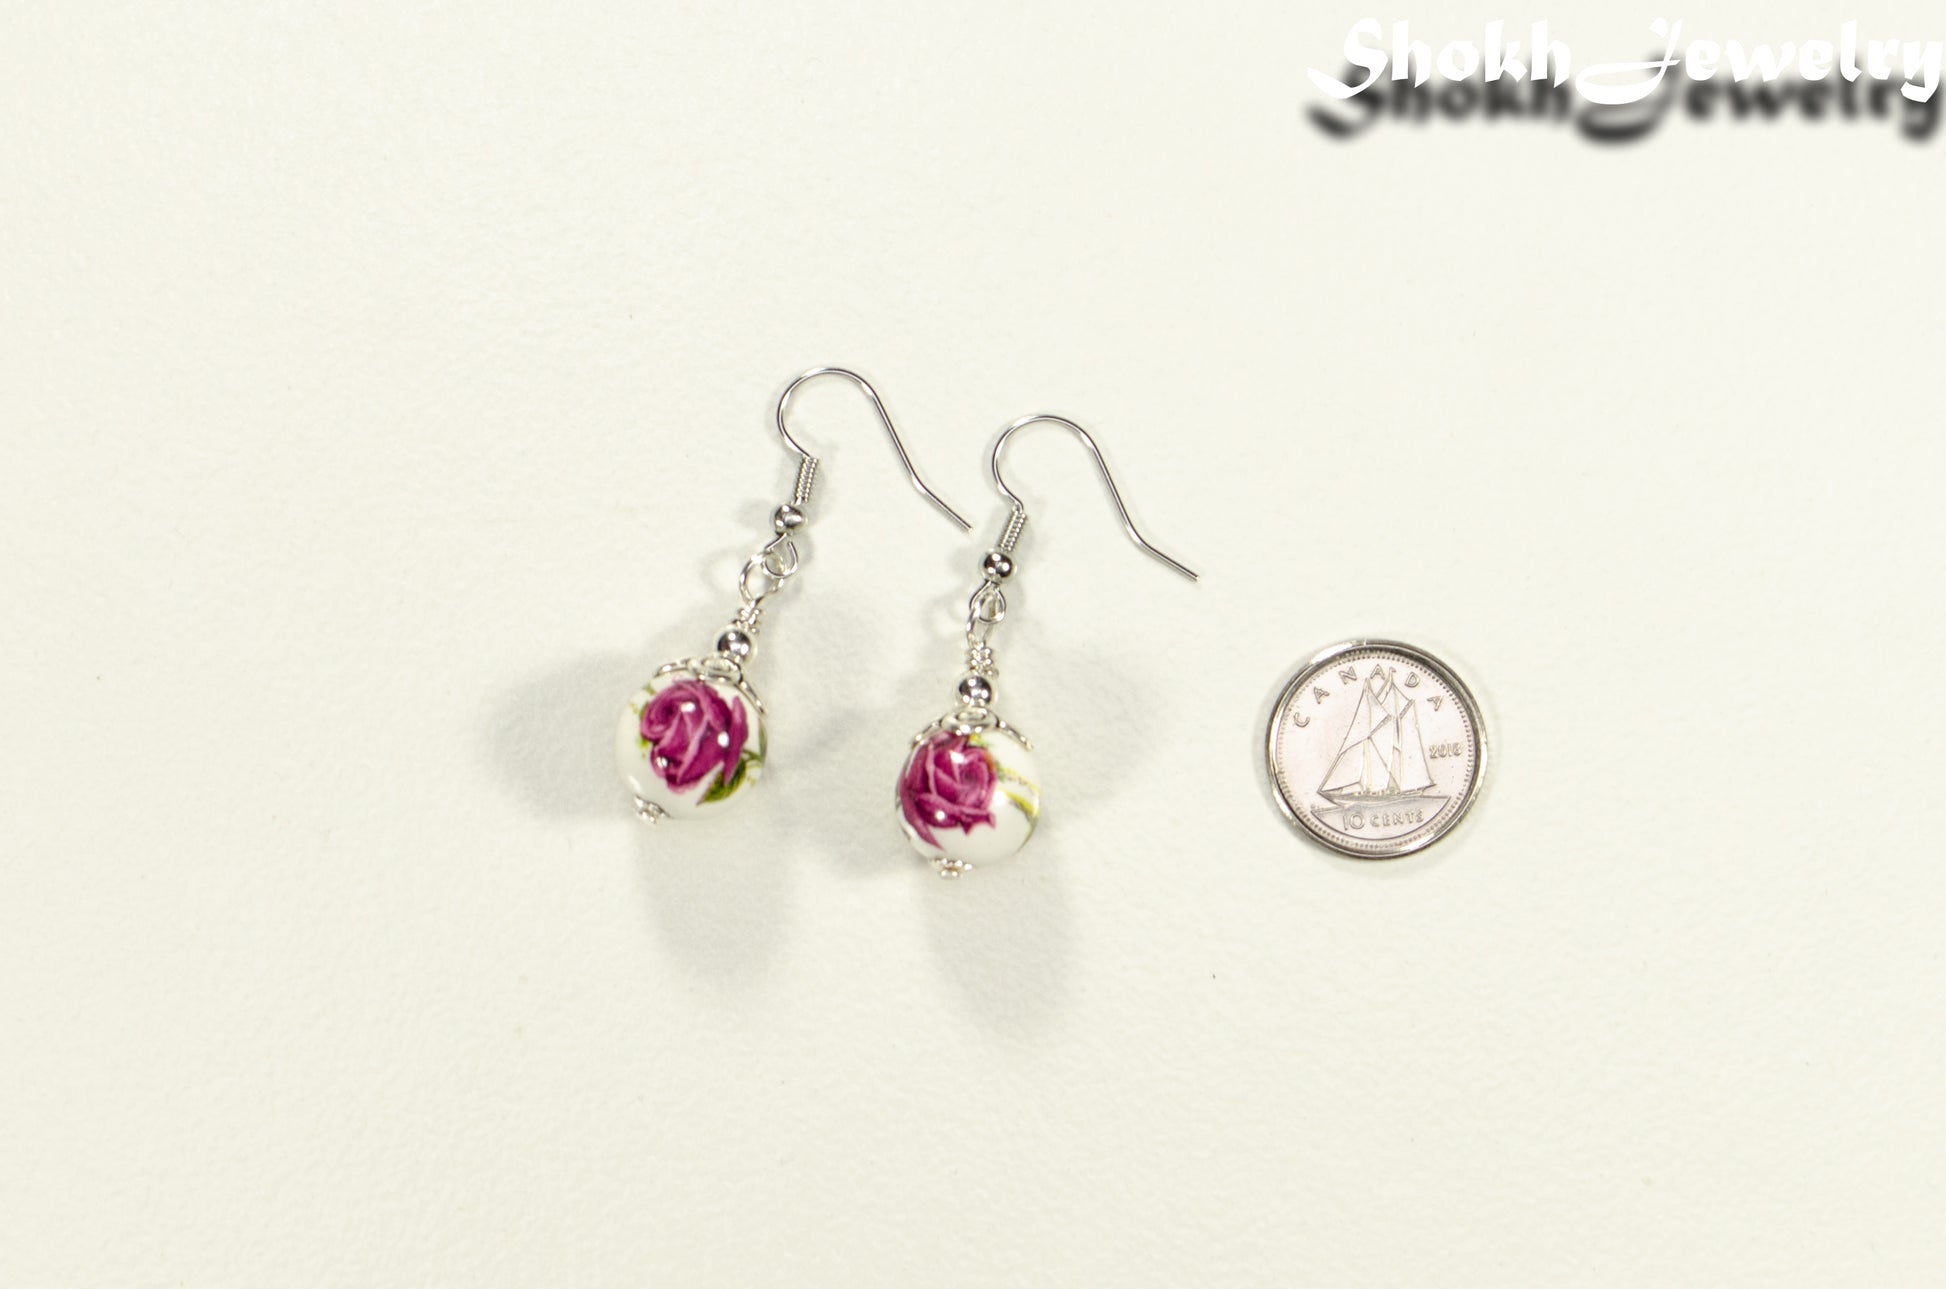 12mm Ceramic Pink Flower Earrings beside a dime.